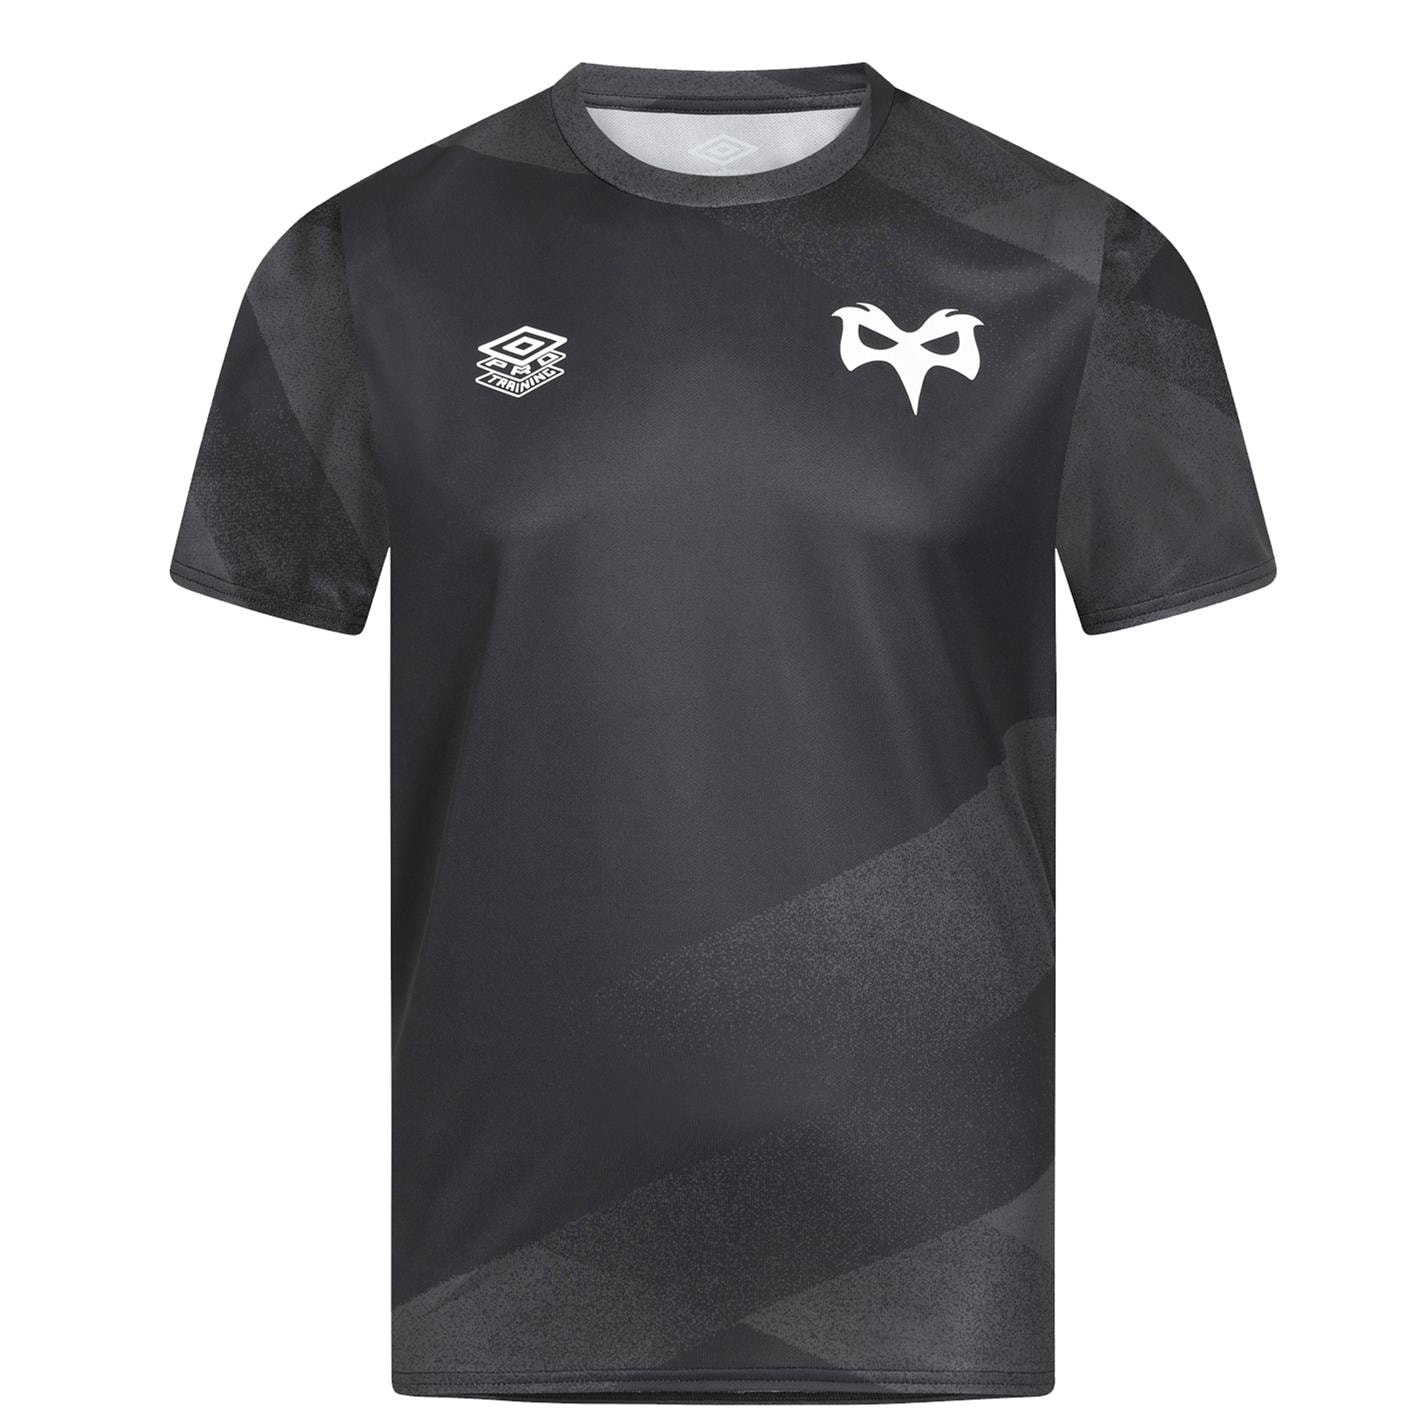 Umbro Ospreys Warm Up Shirt 2021 2022 pentru Barbati negru gri carbon